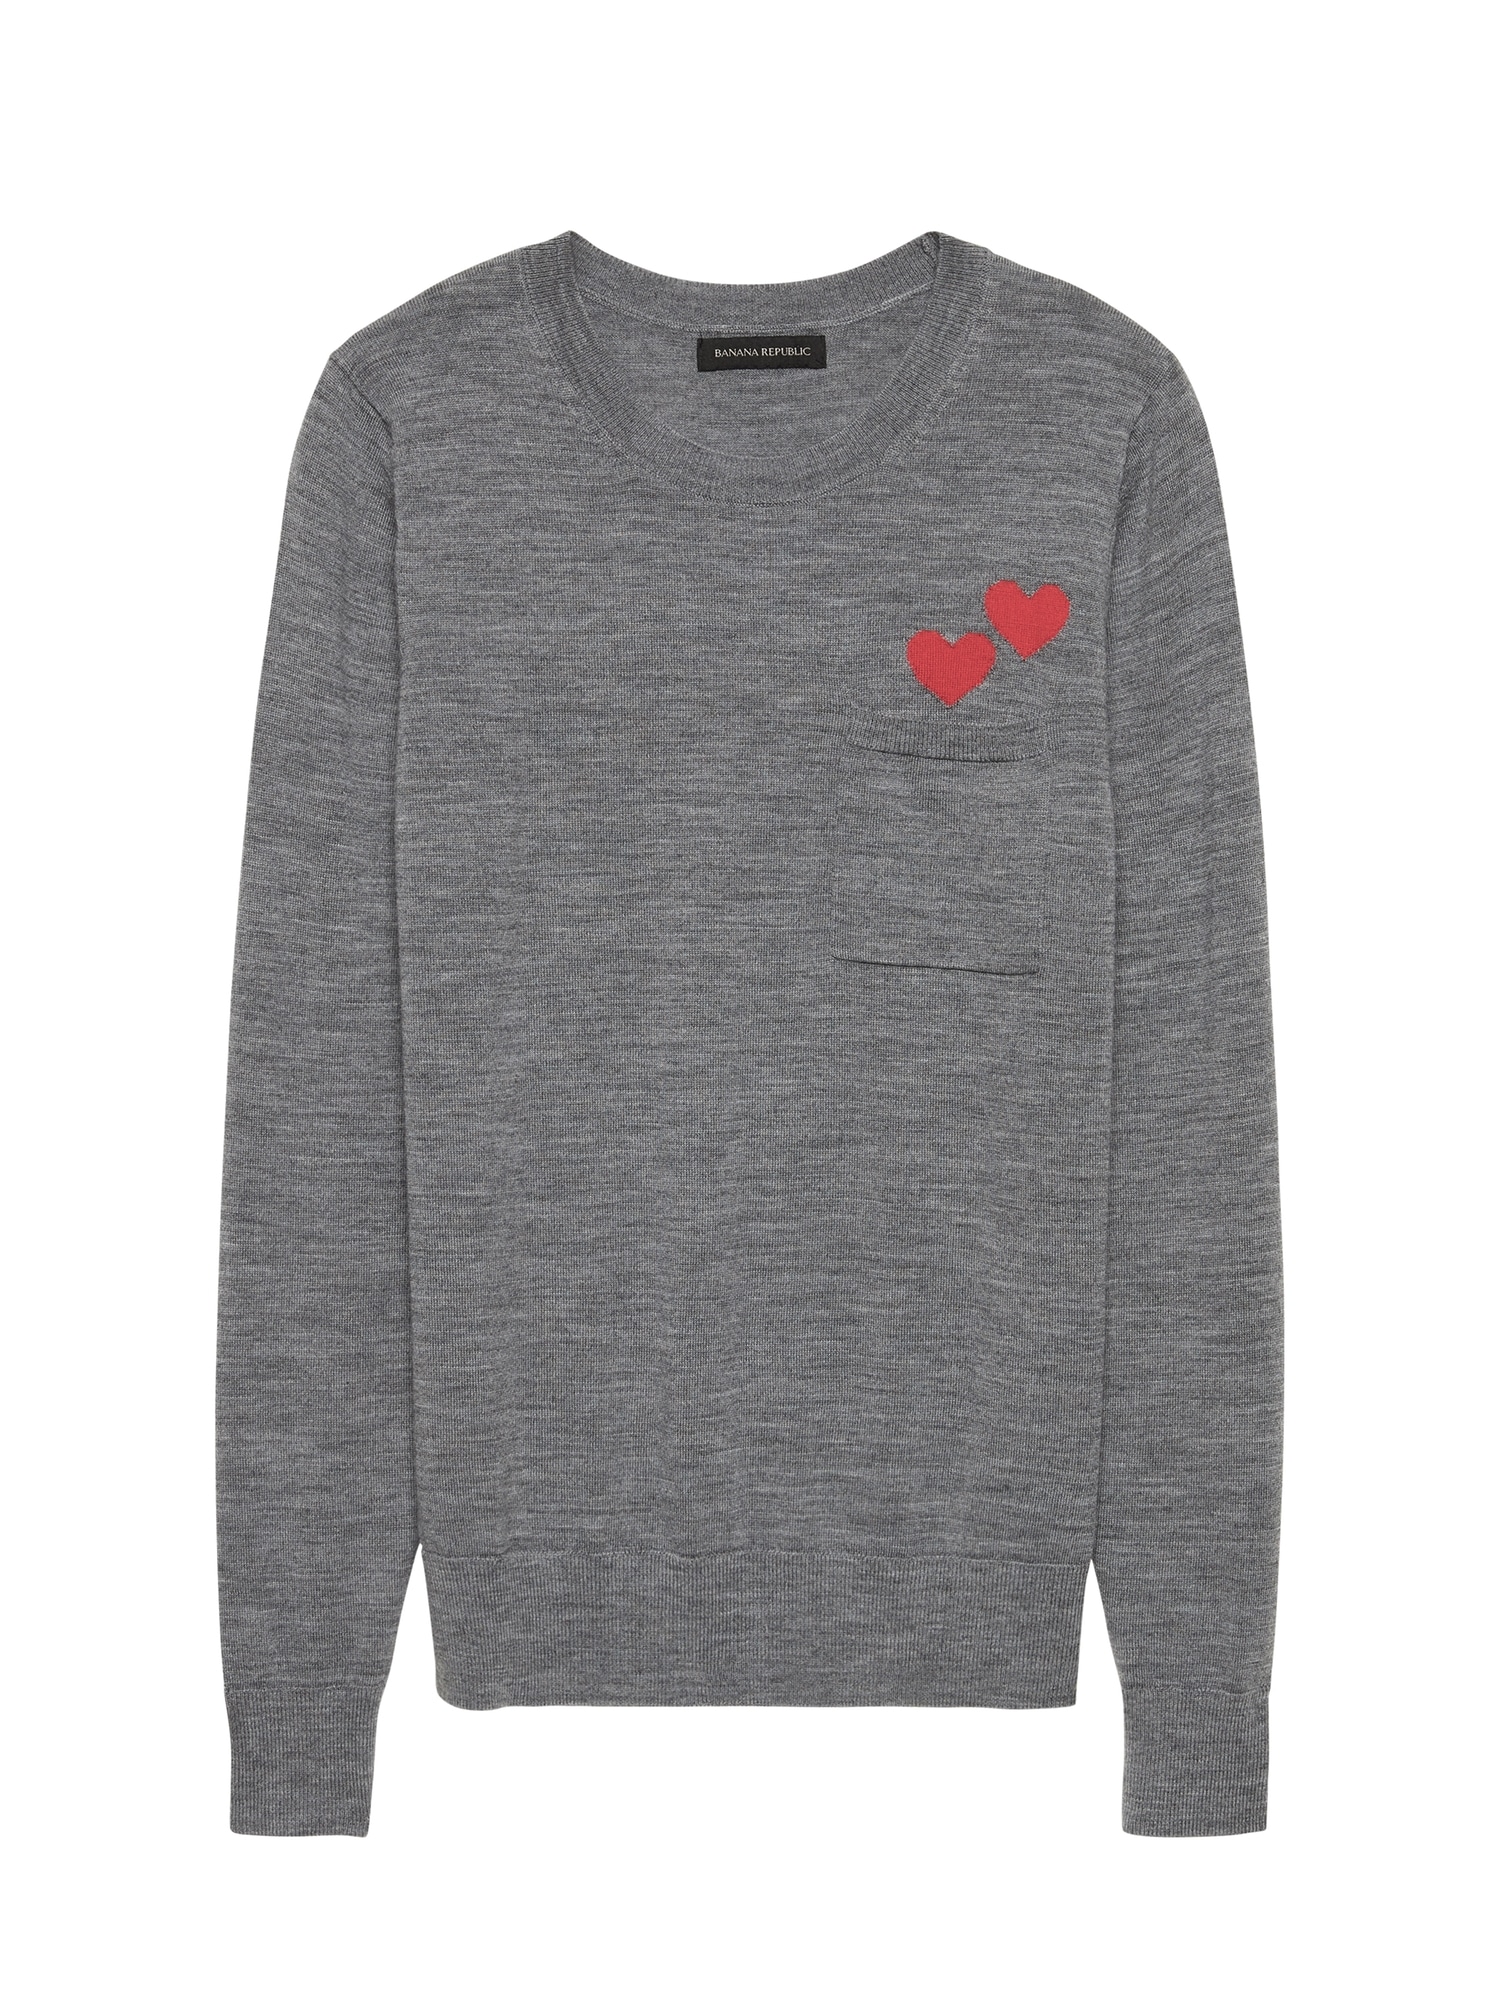 Heart Pocket Sweater